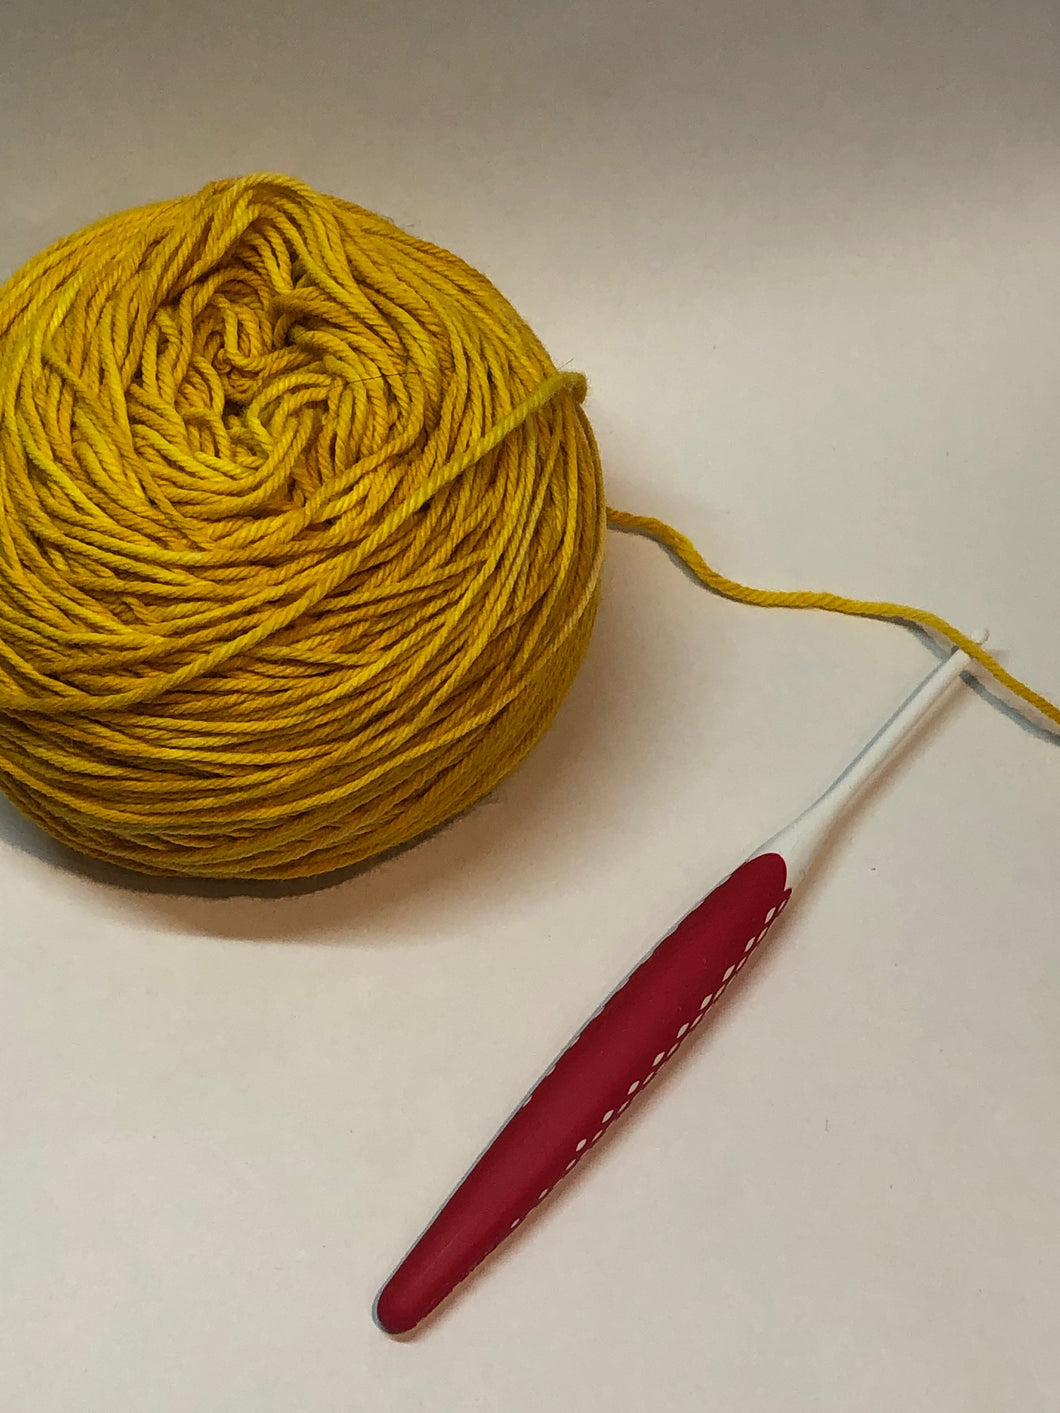 Crochet Prym/ Prym Crochet hook